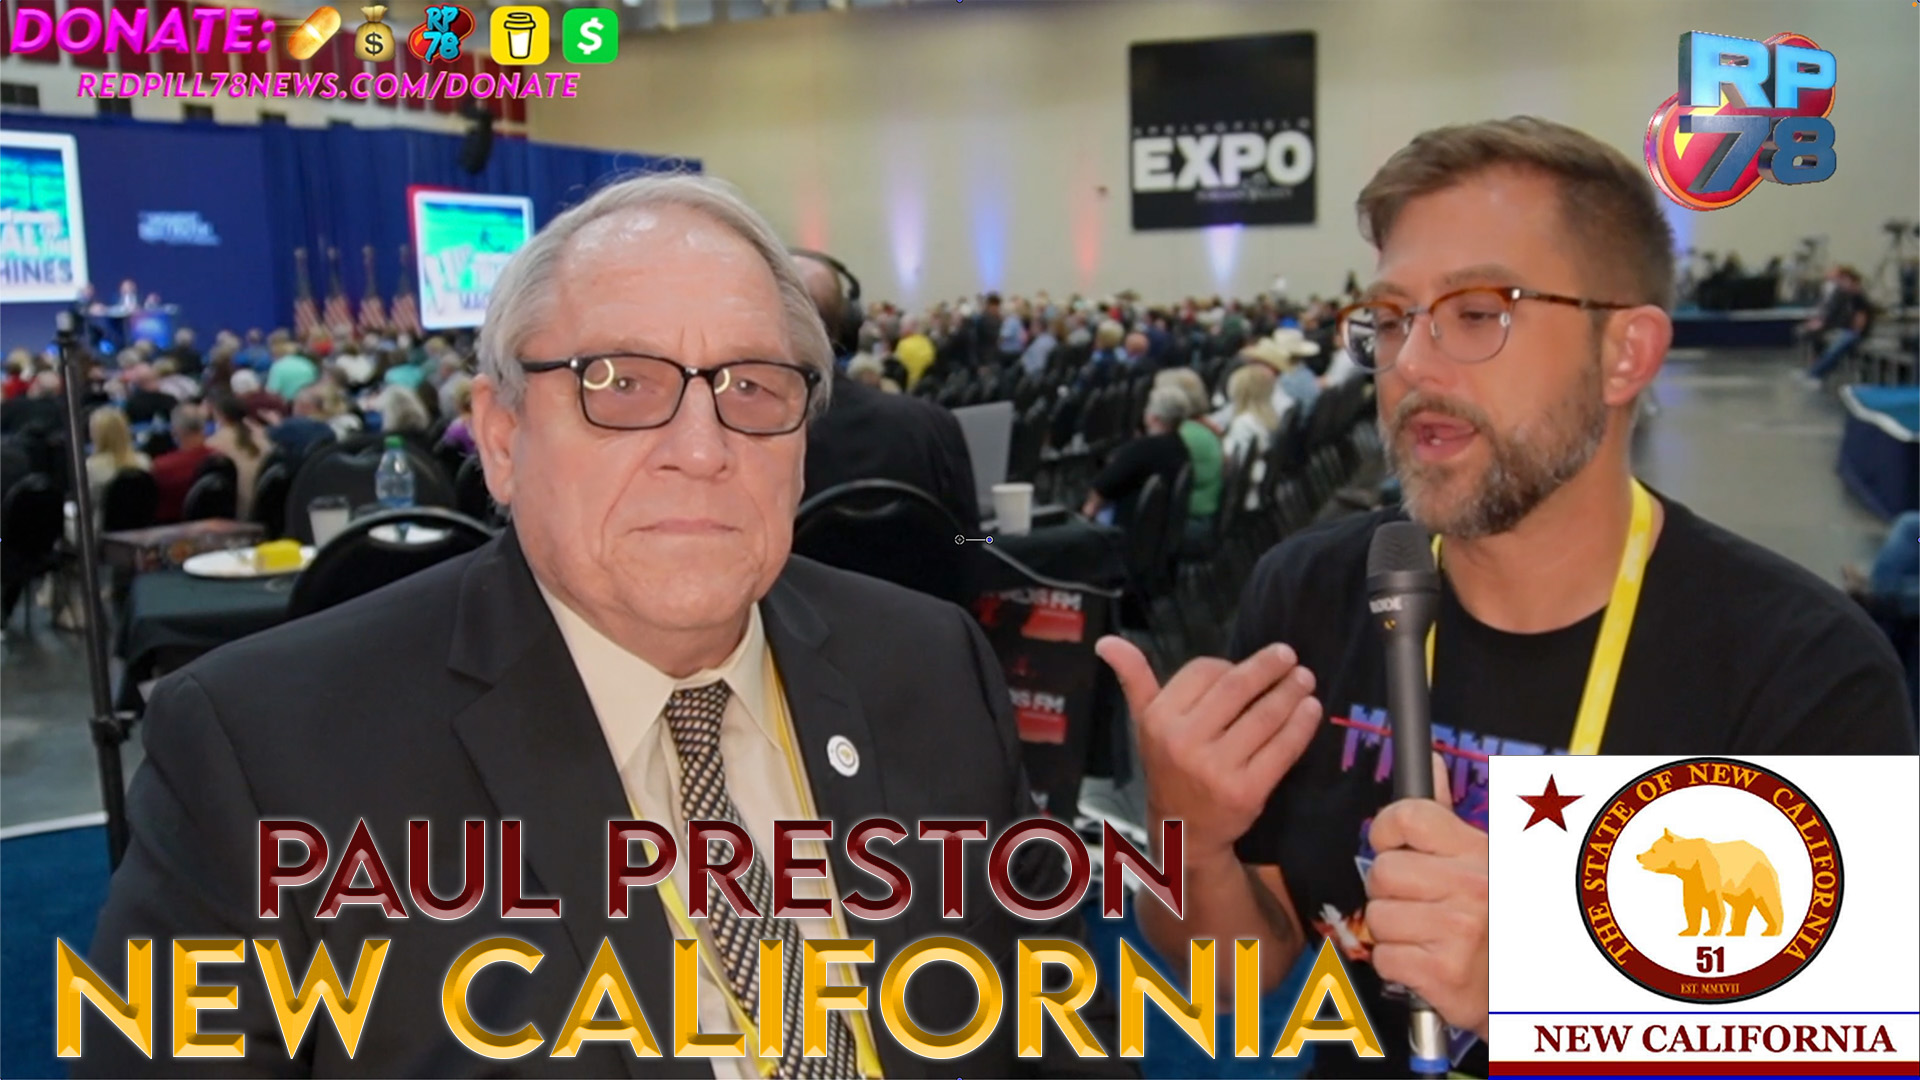 Paul Preston Talks New California at the Moment of Truth Summit